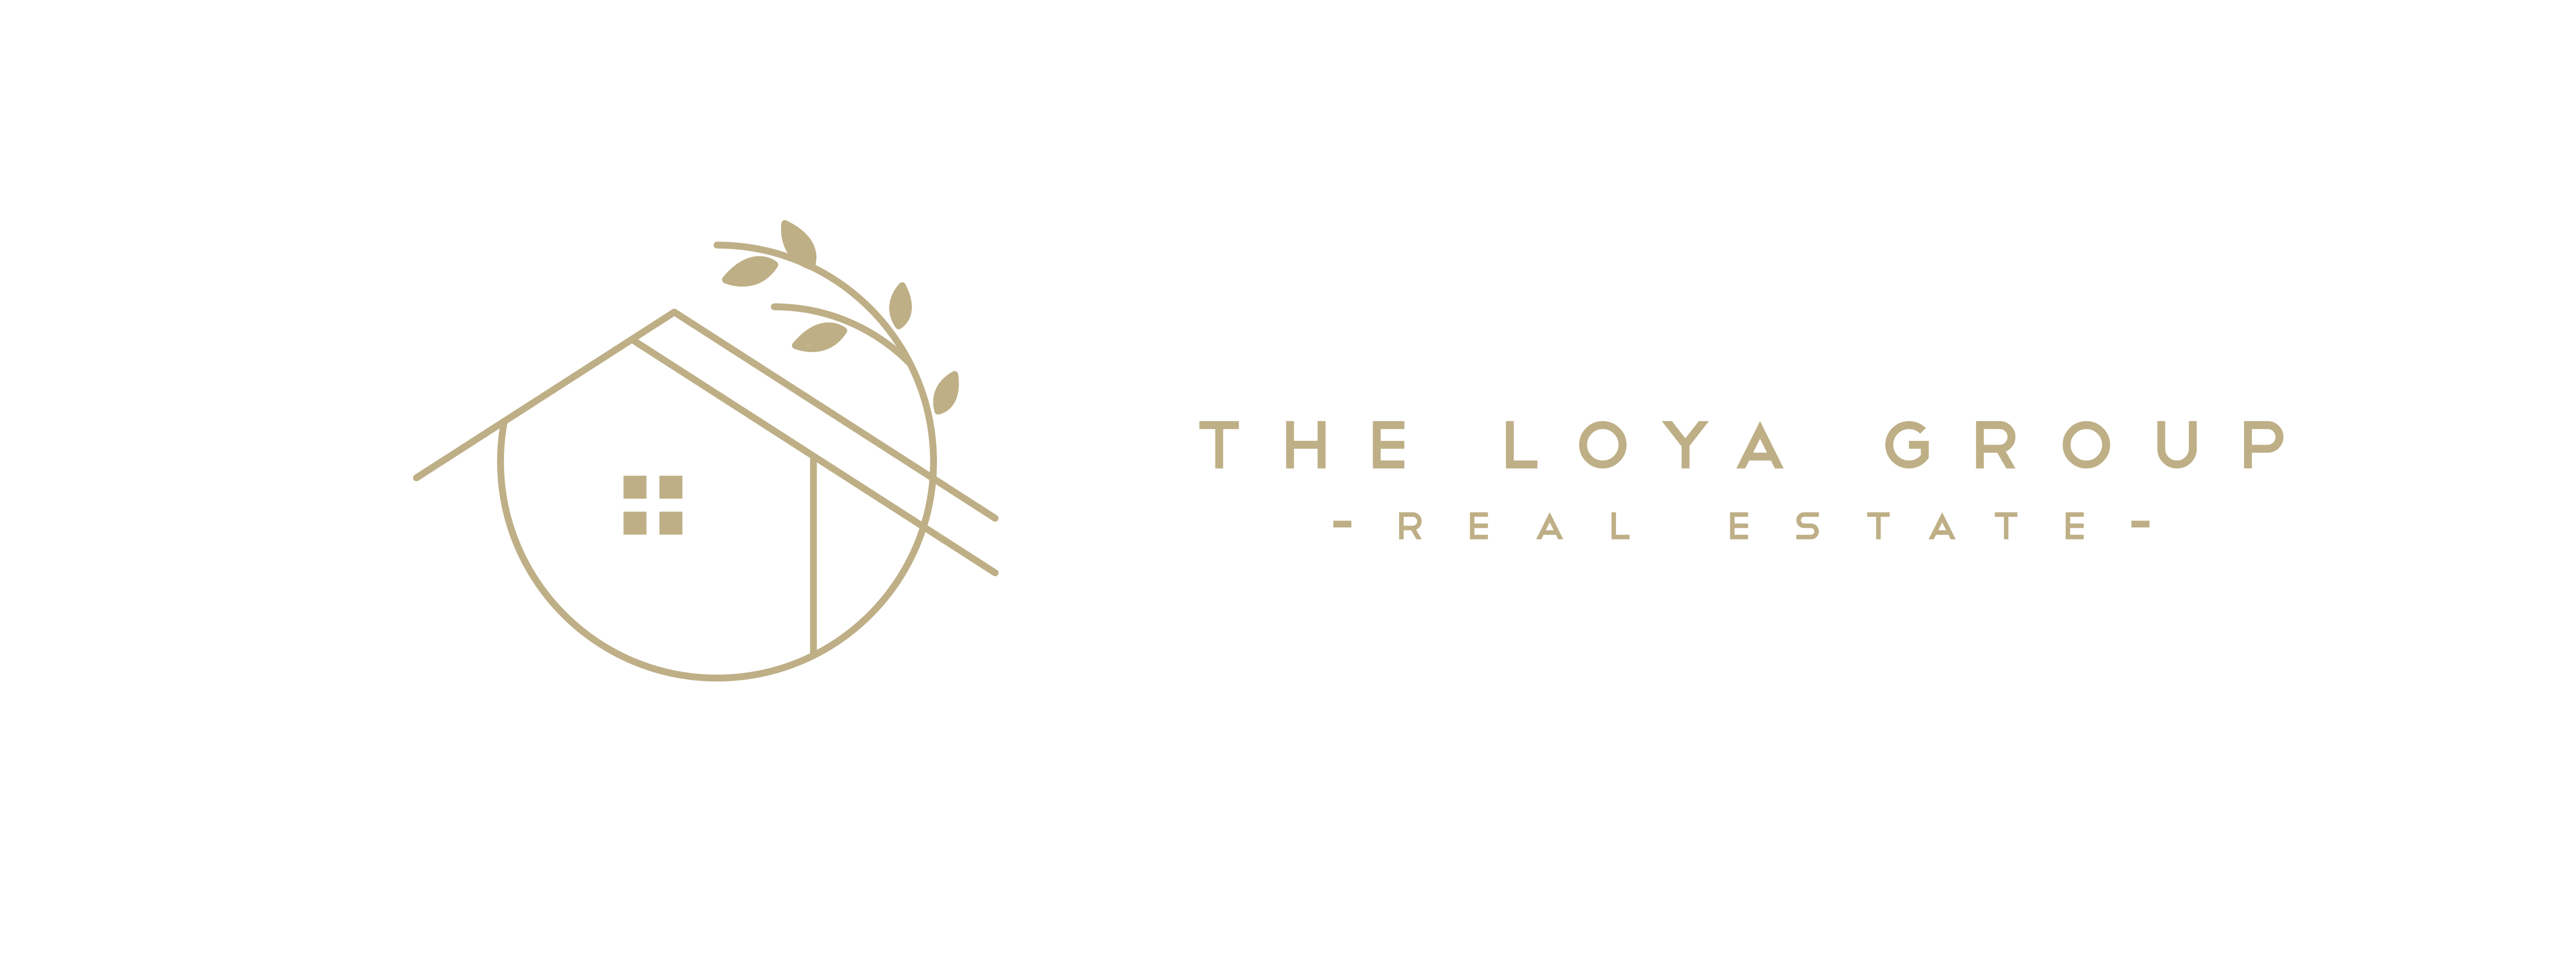 Long TheLoyaGroup_Gold